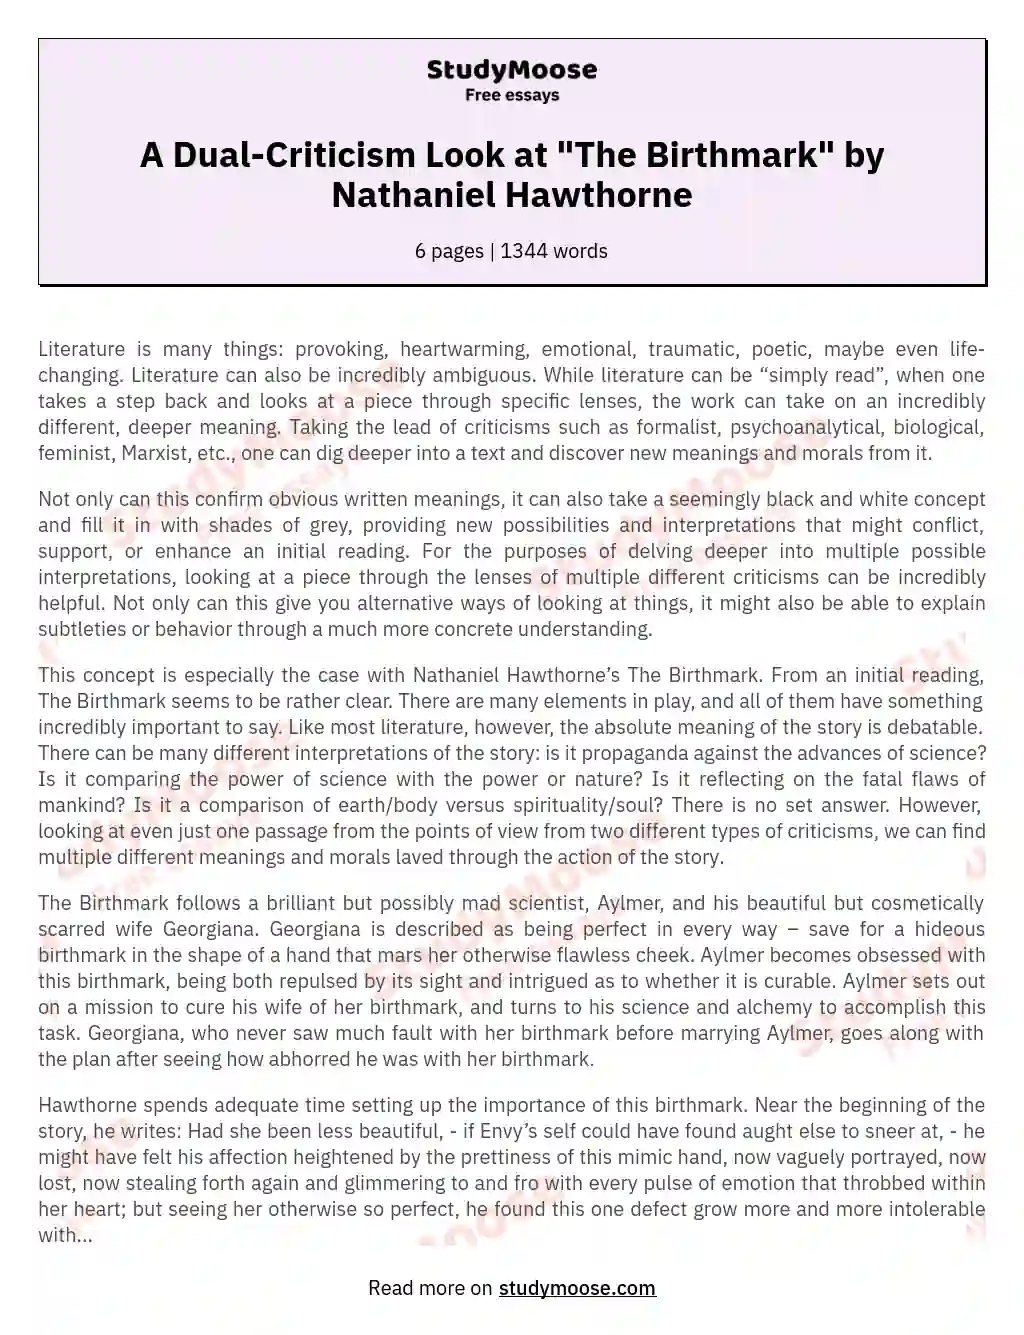 A Dual-Criticism Look at "The Birthmark" by Nathaniel Hawthorne essay